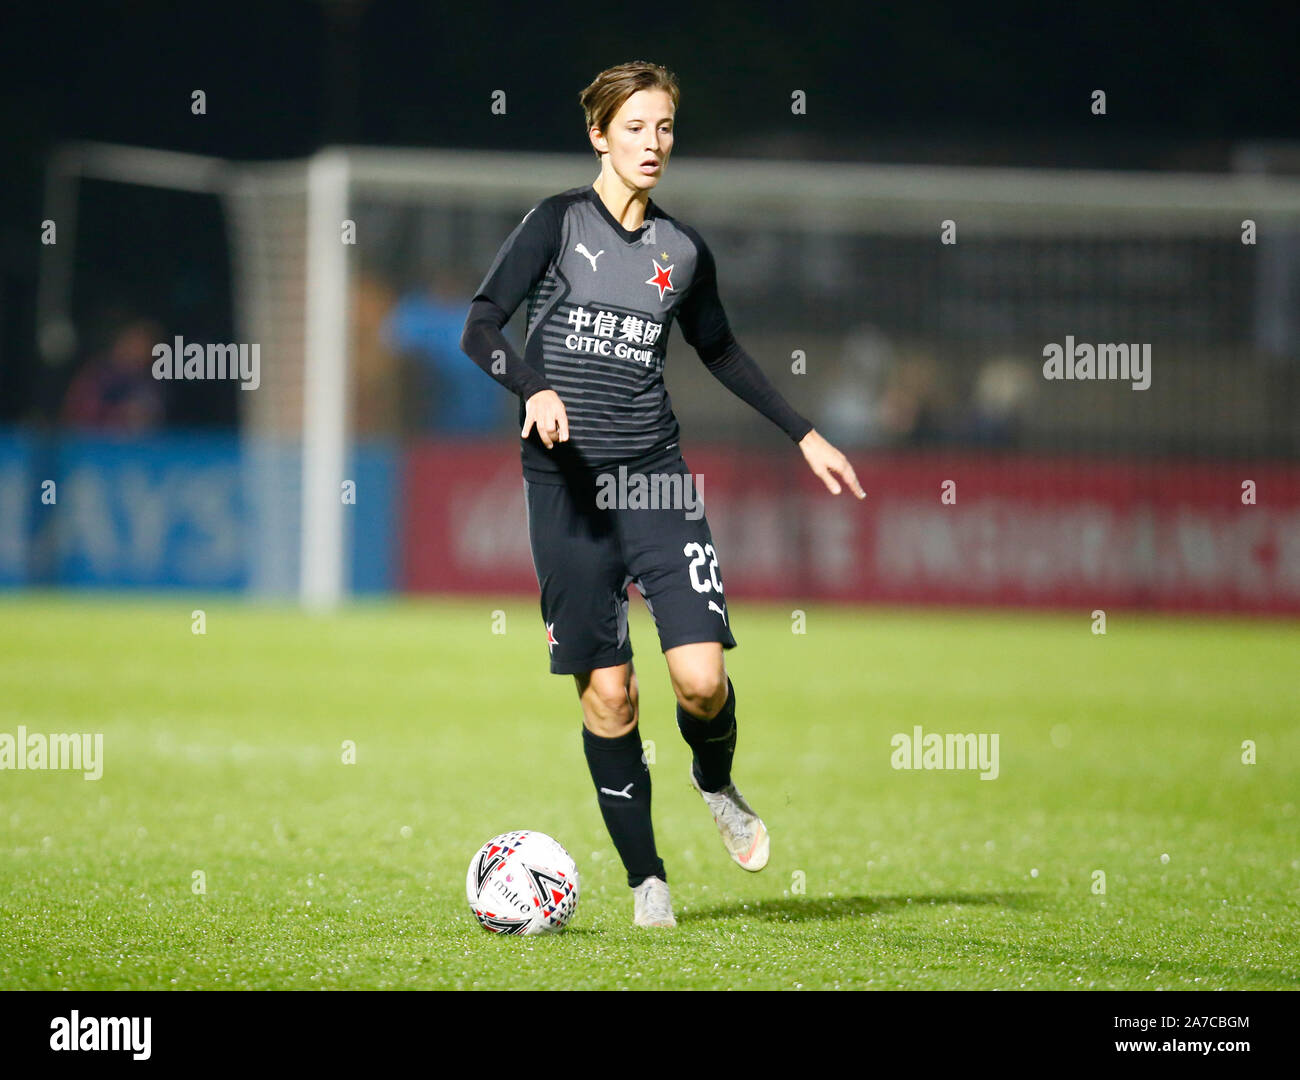 Folhapress - Fotos - Women's Champions League - Group B - Slavia